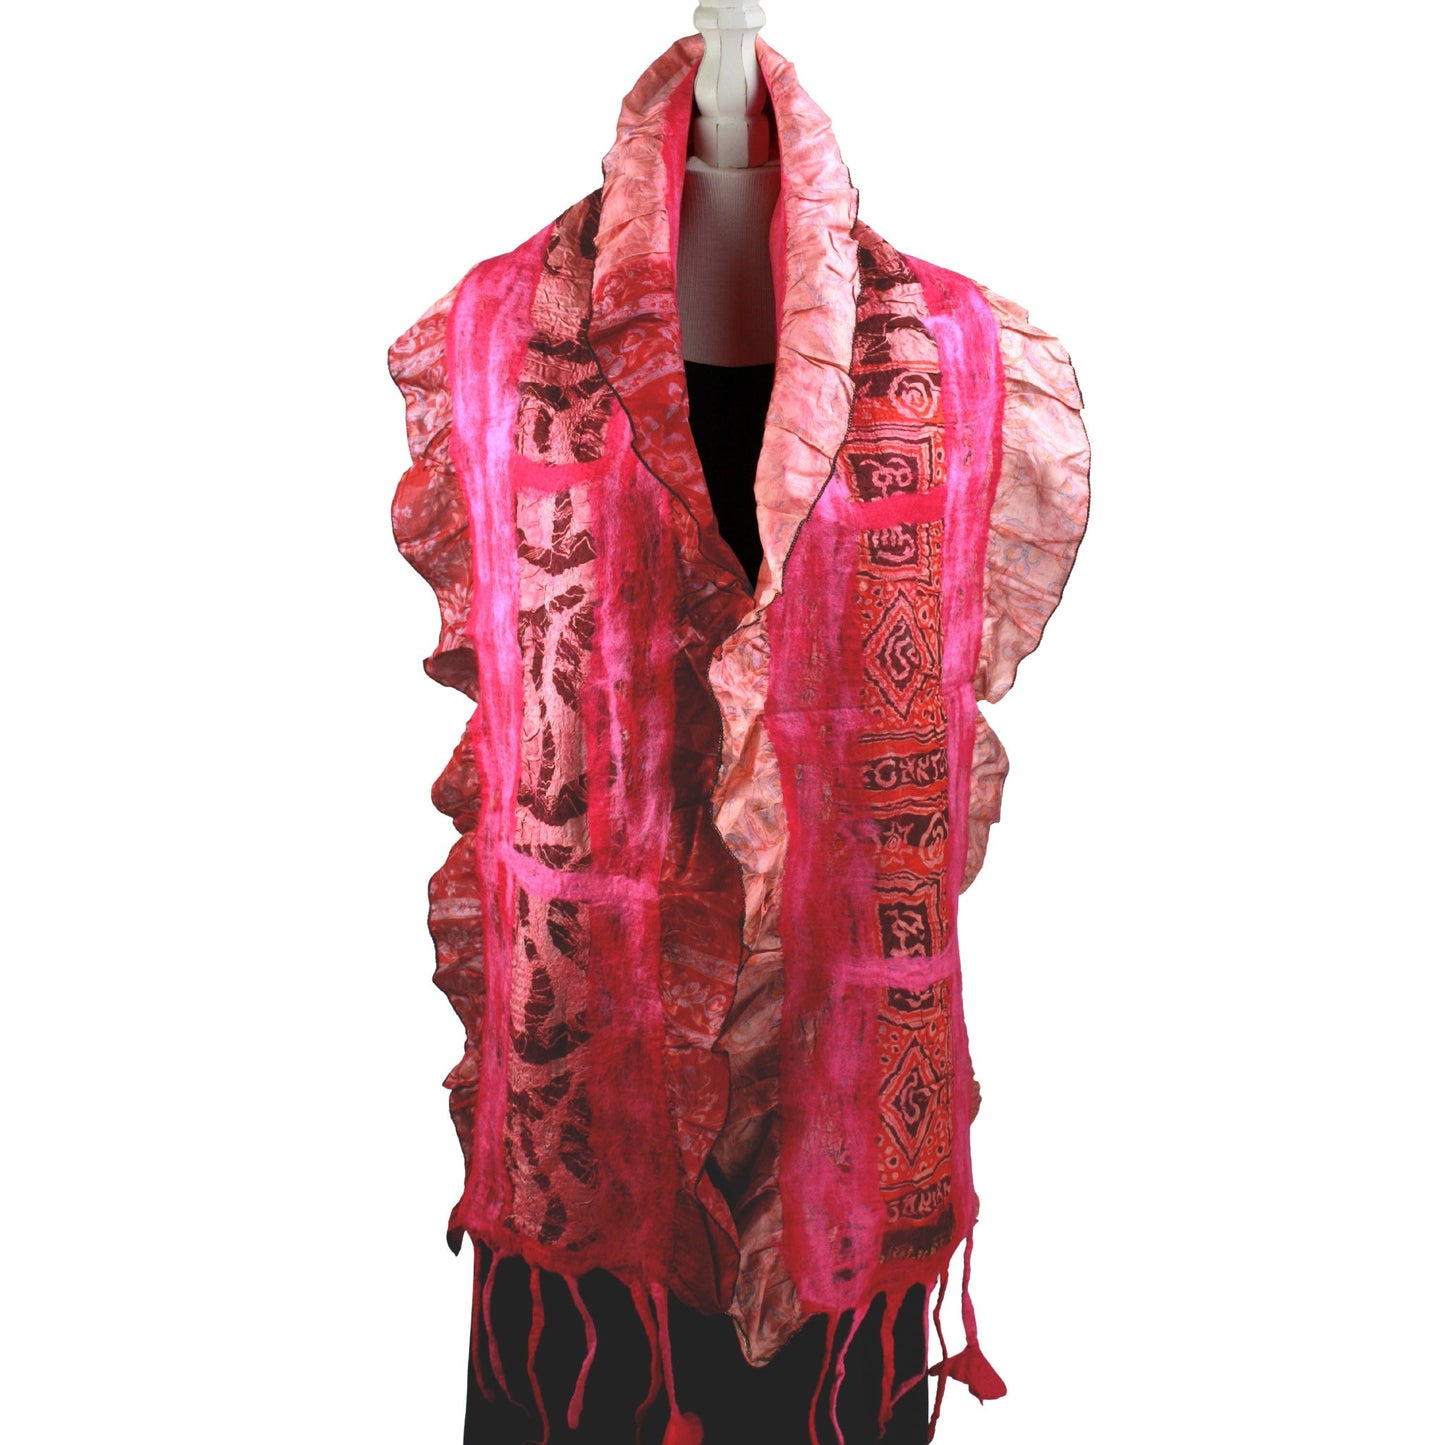 Sari collage scarf in pinks, salmon, blush and brown